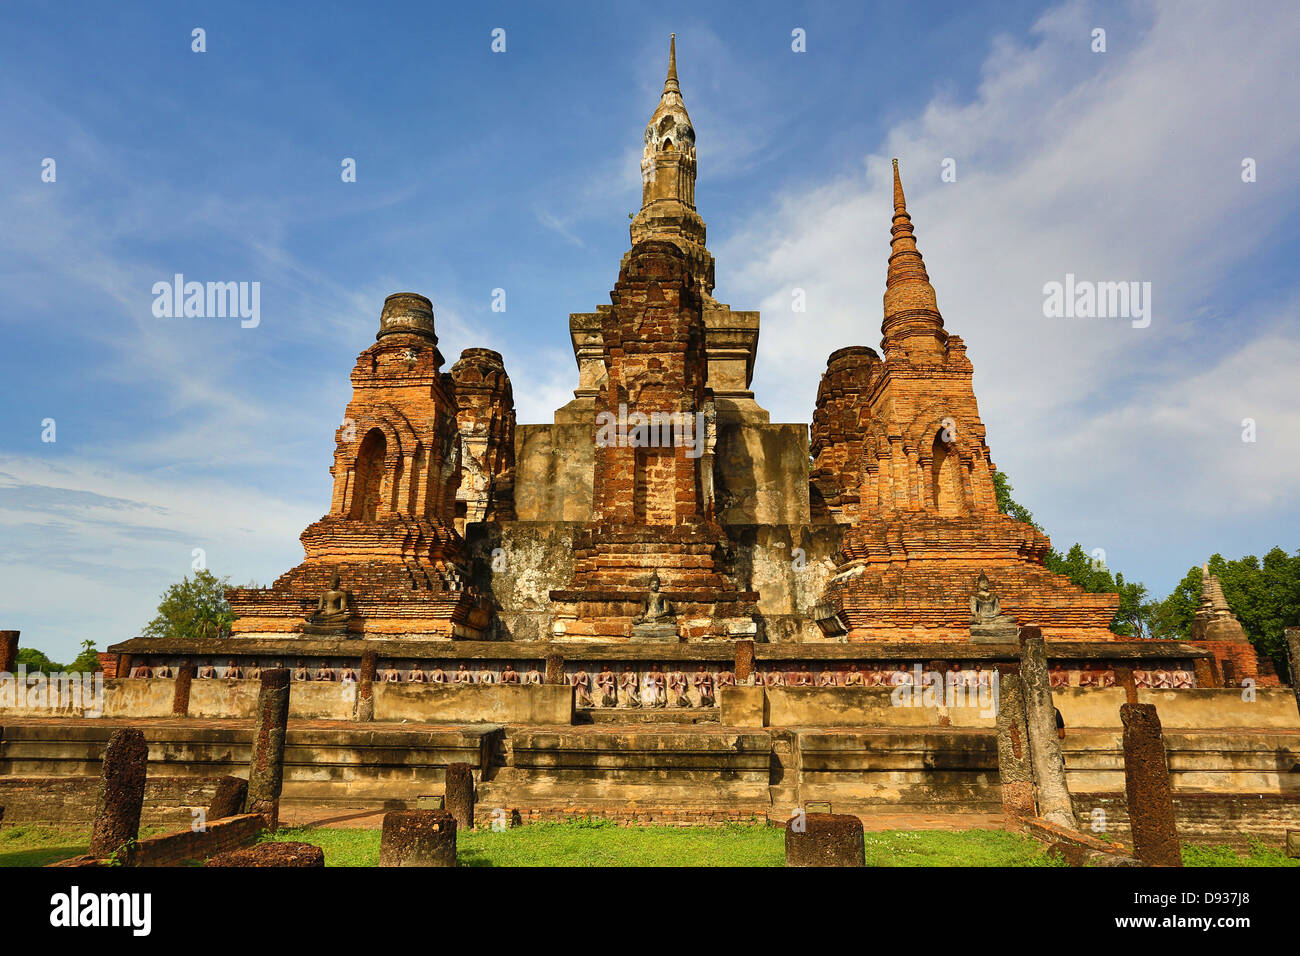 Wat Mahathat temple, Sukhotai Historical Park, Sukhotai, Thailand  Stock Photo